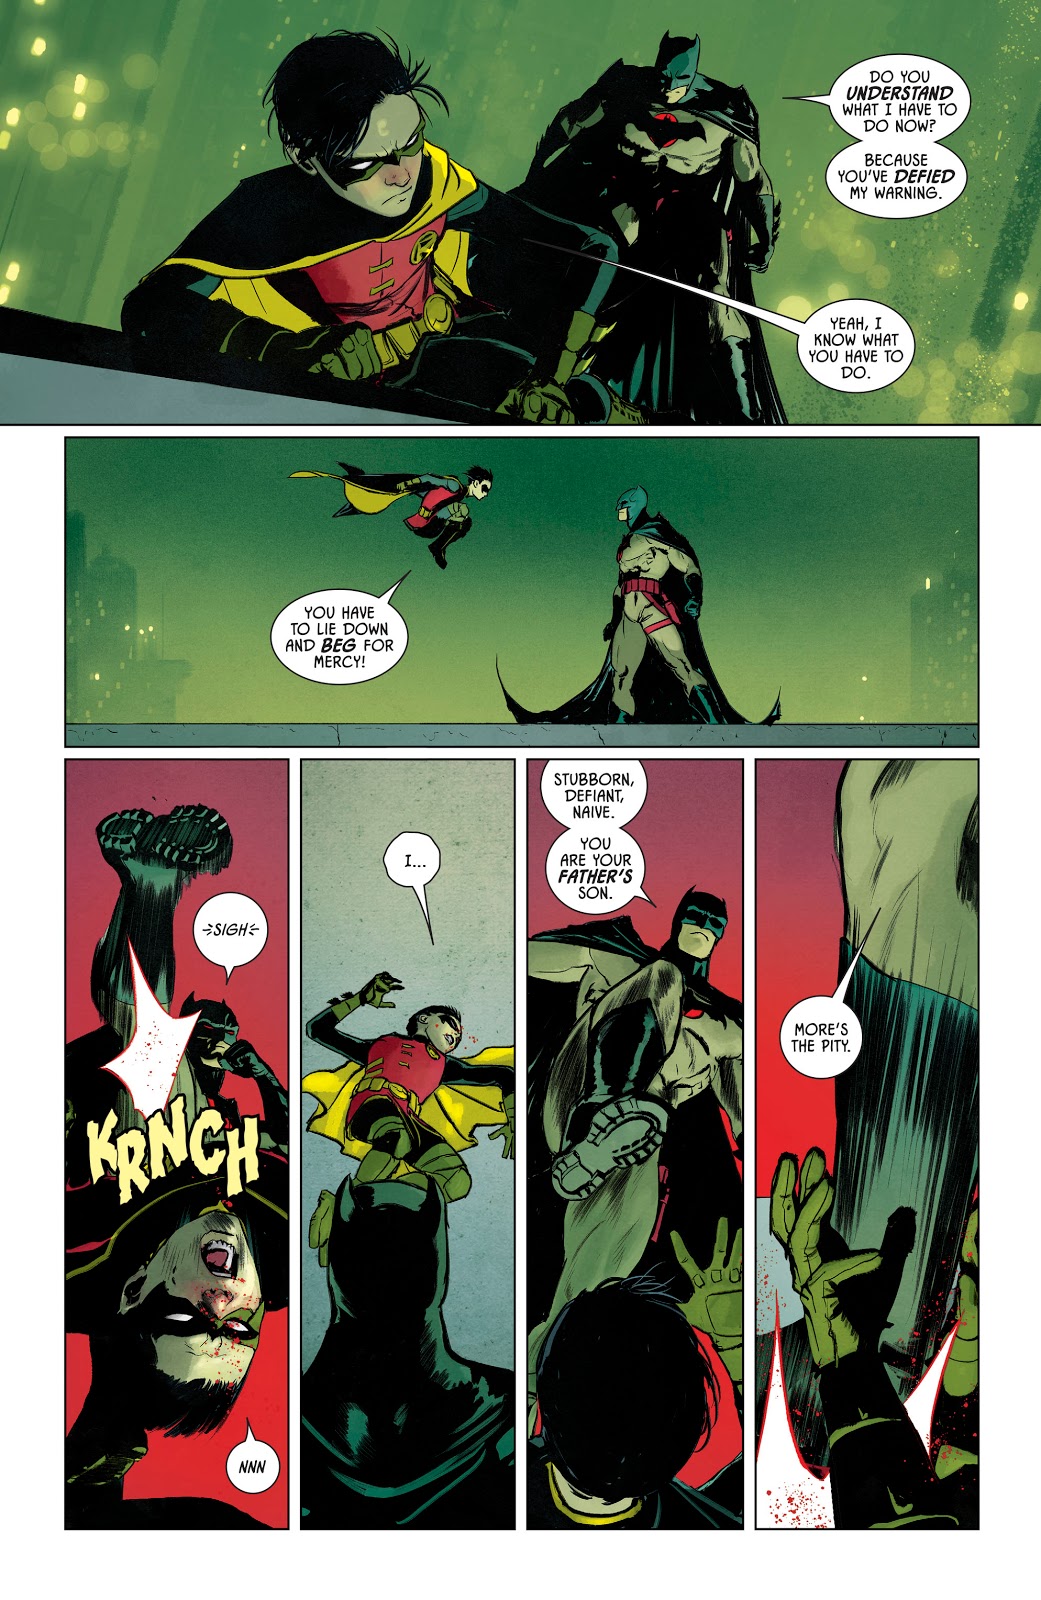 Robin VS Batman (Thomas Wayne) – Comicnewbies